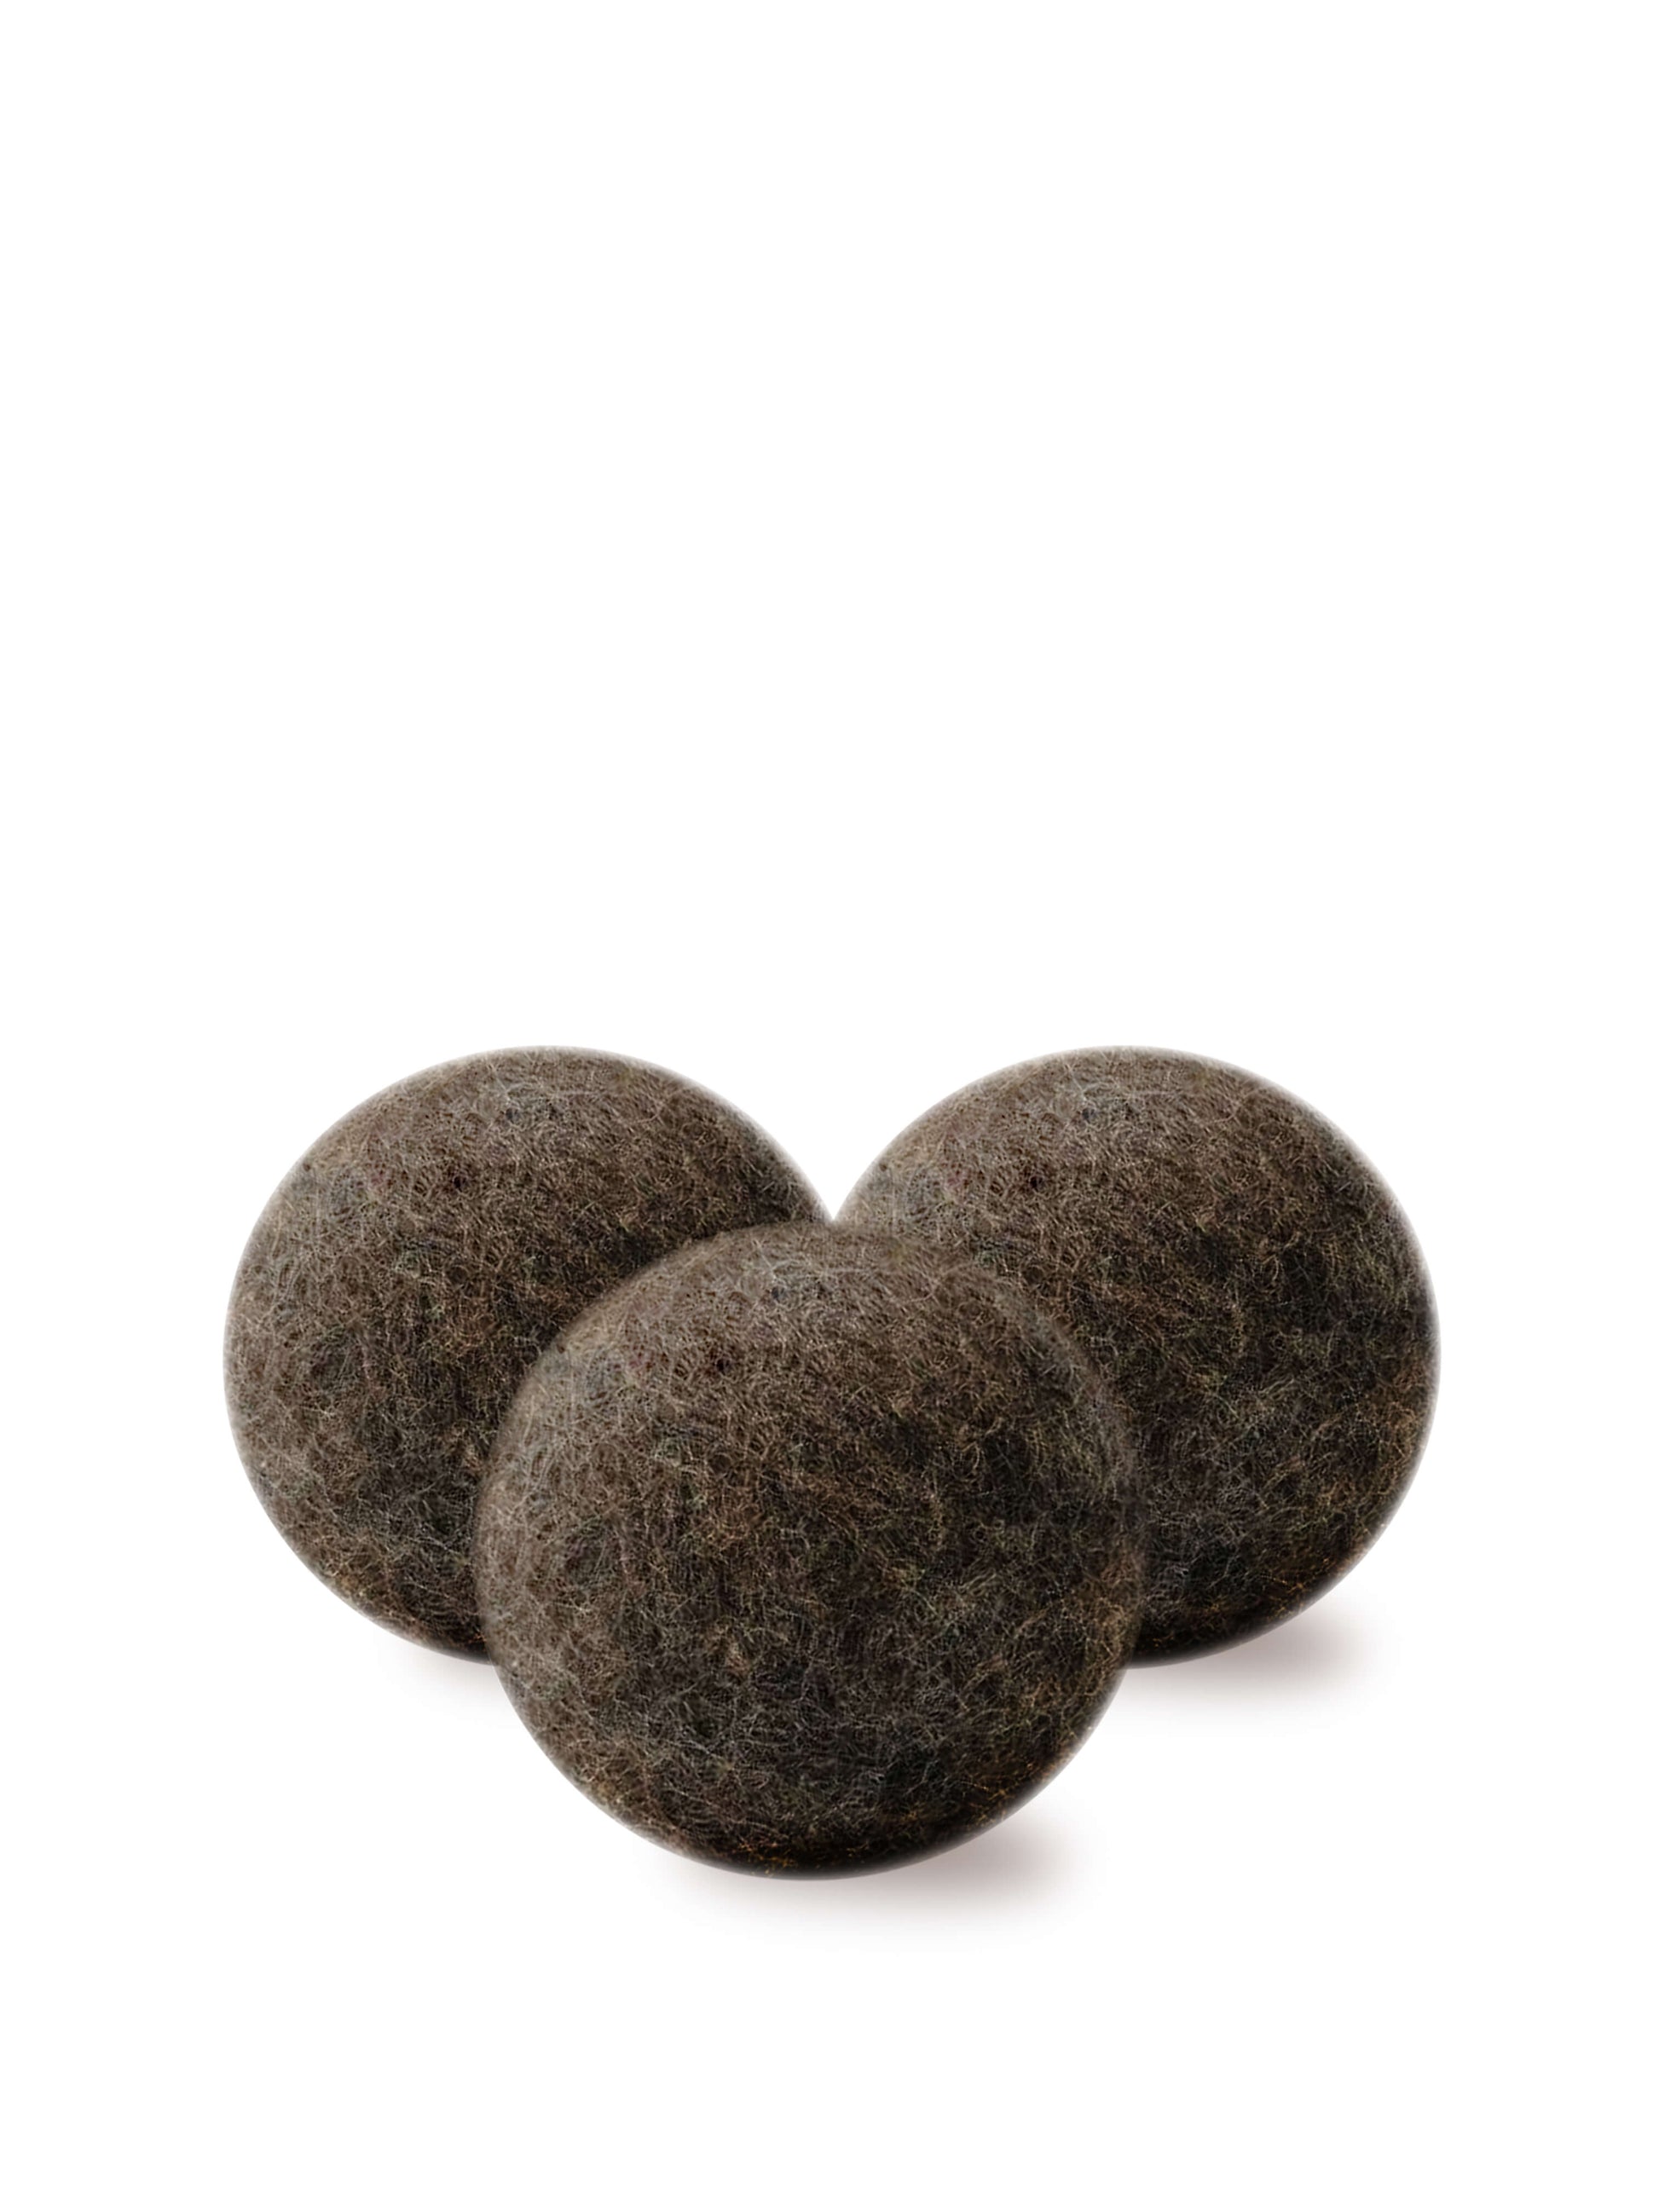 3 brown wool dryer balls